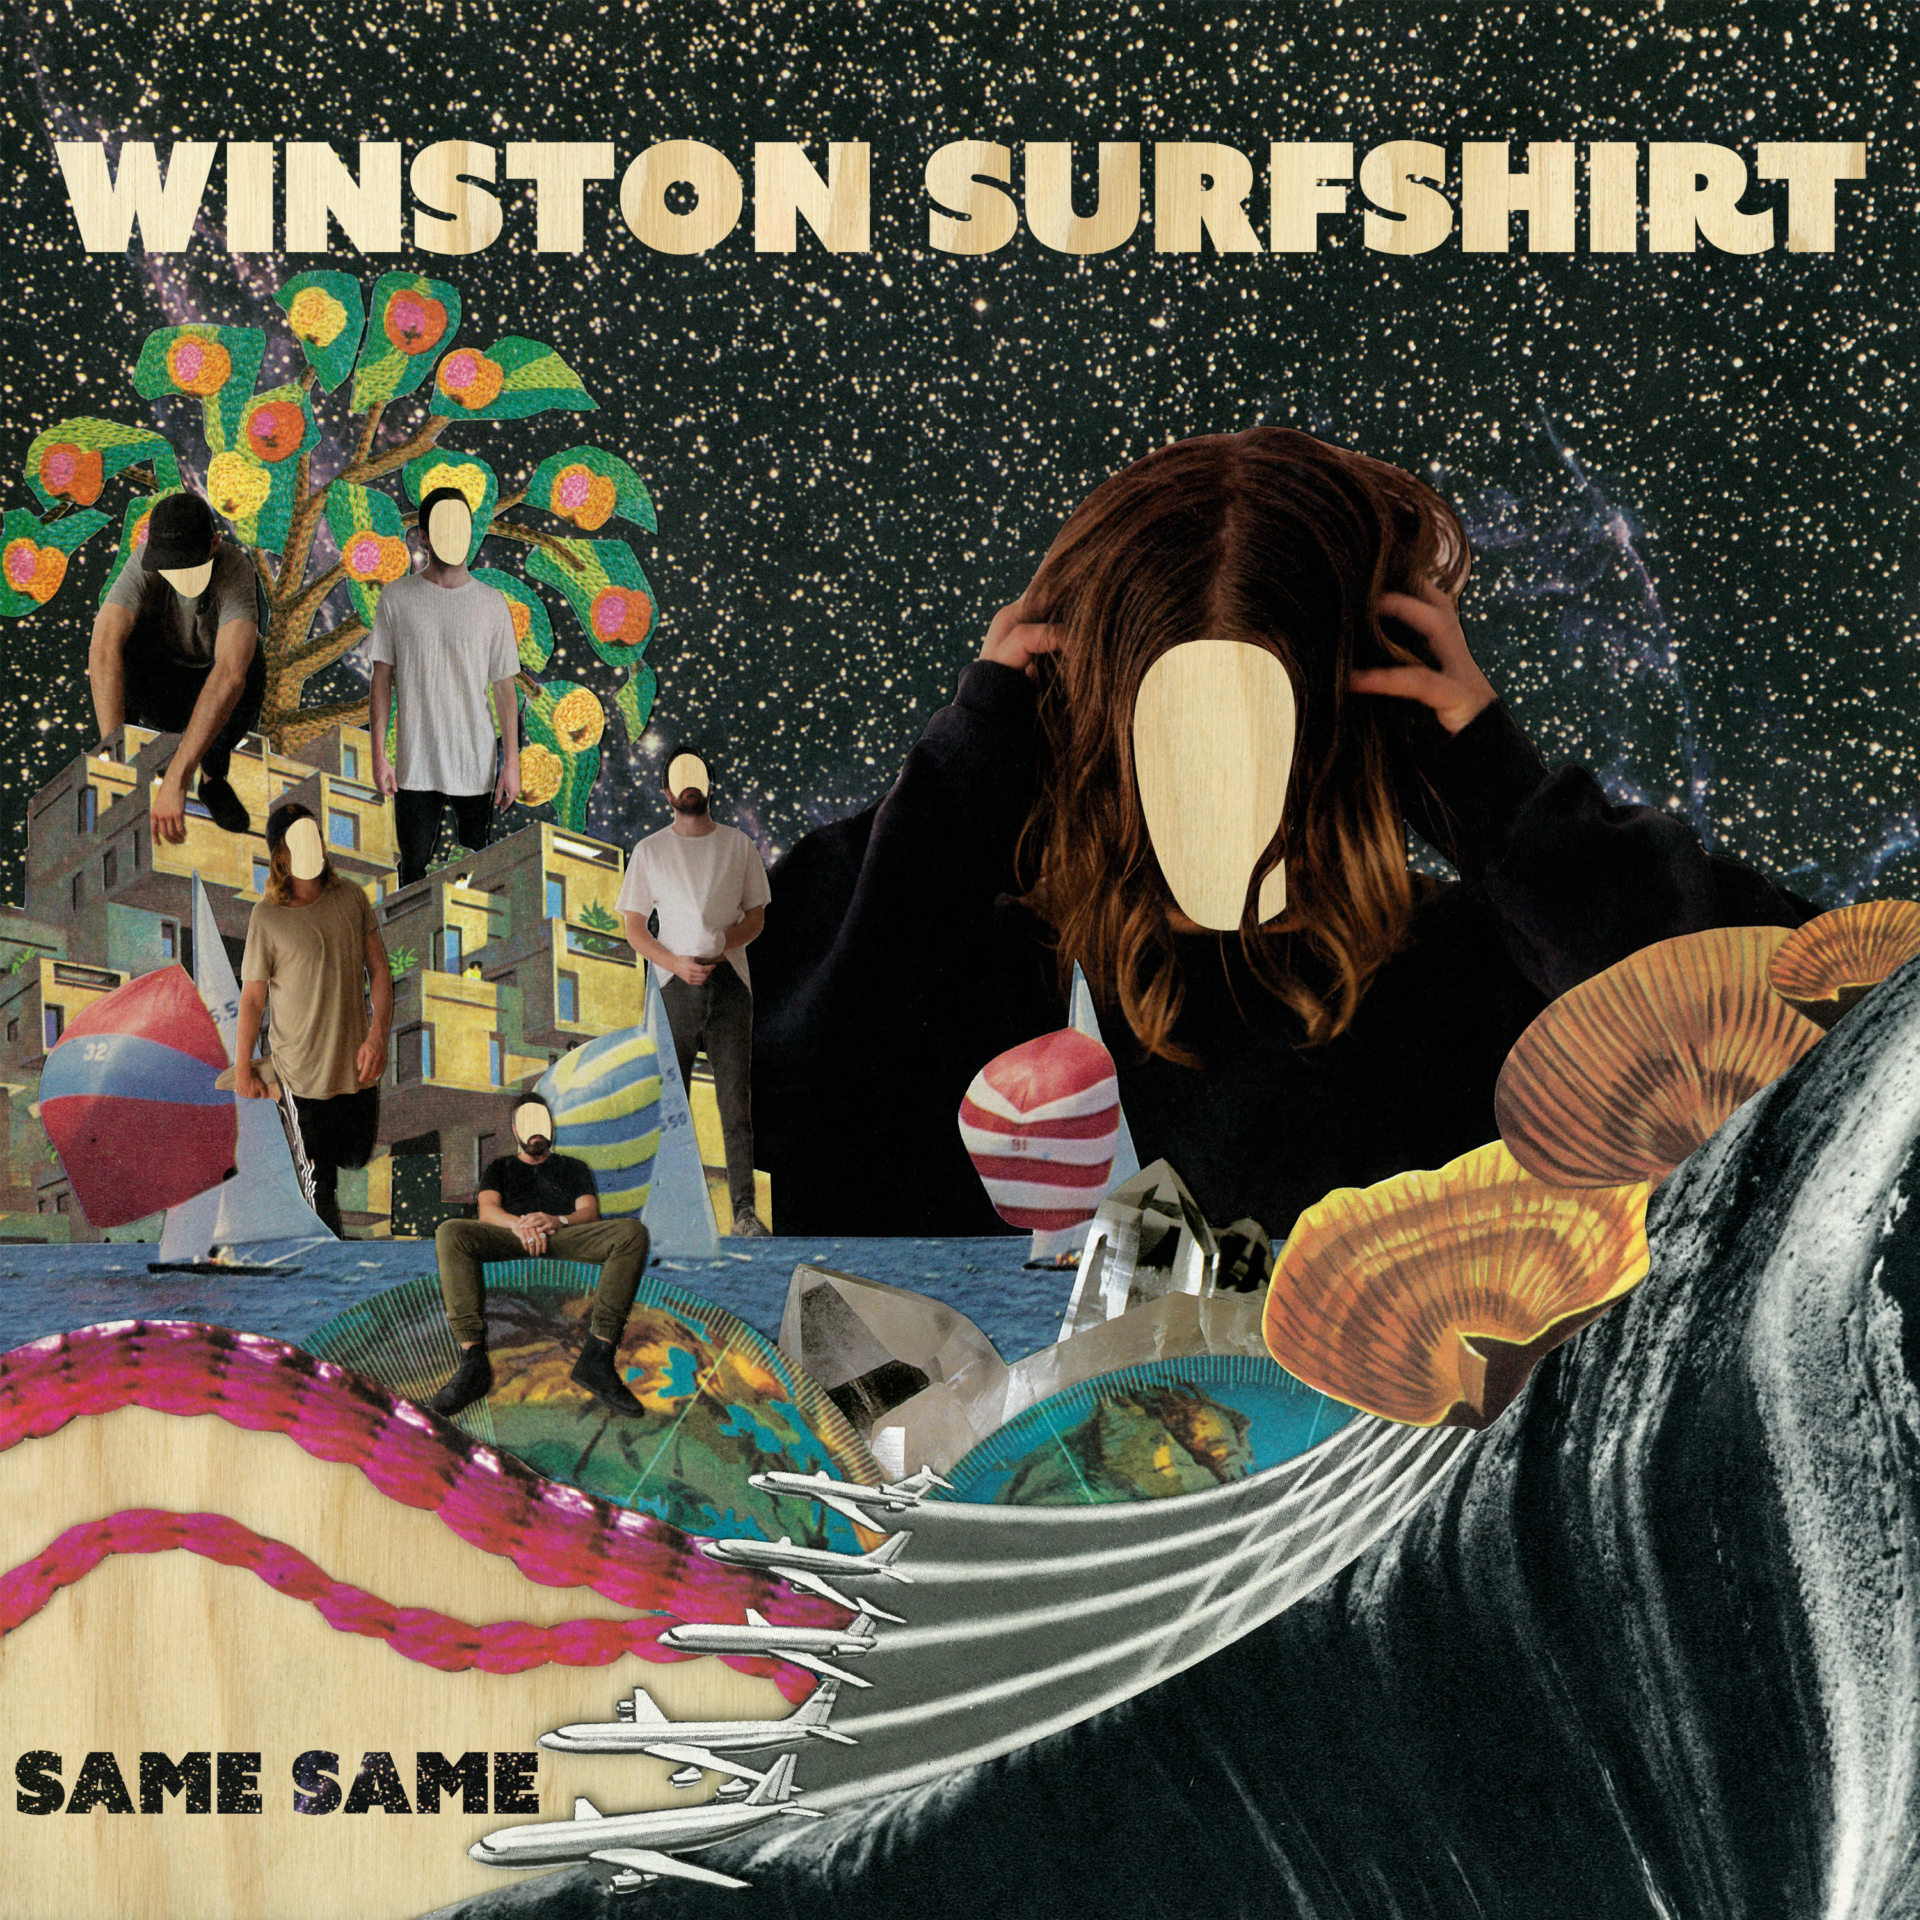 Track Of The Day #1074: Winston Surfshirt - Same Same